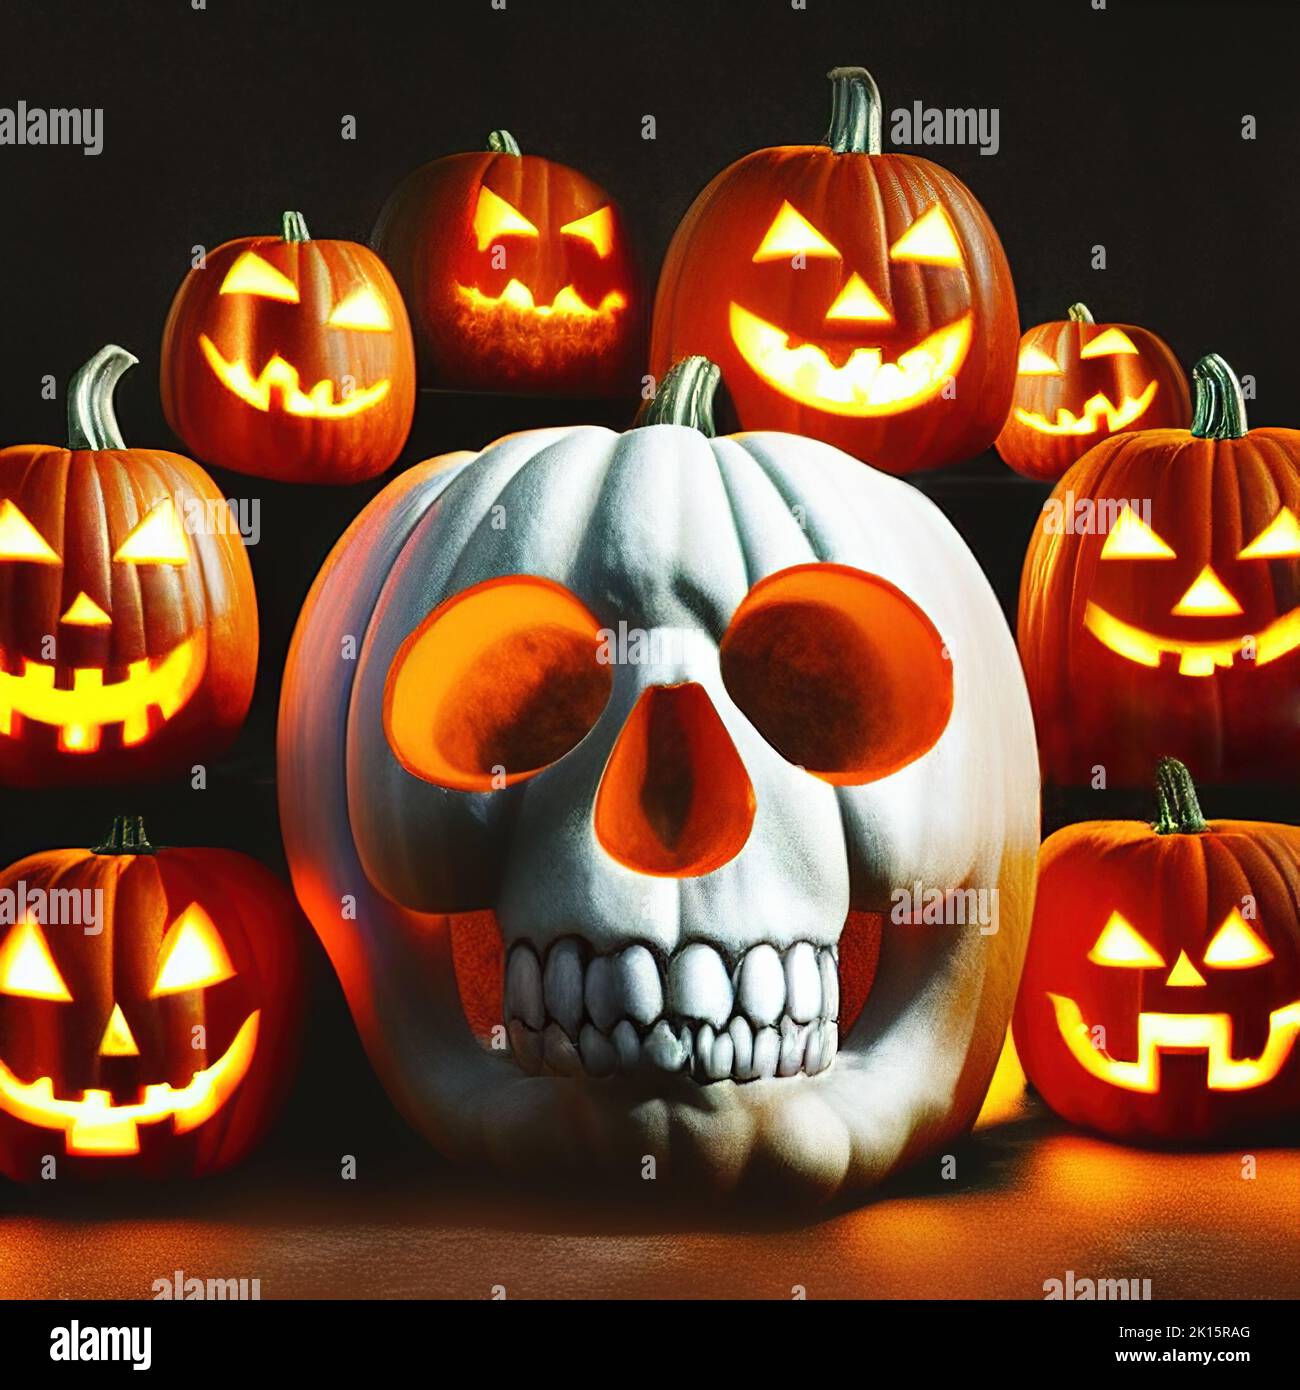 3d rendering of Halloween jack-o-lantern pumpkin in shape of human skull with smaller curved halloween pumpkins Stock Photo